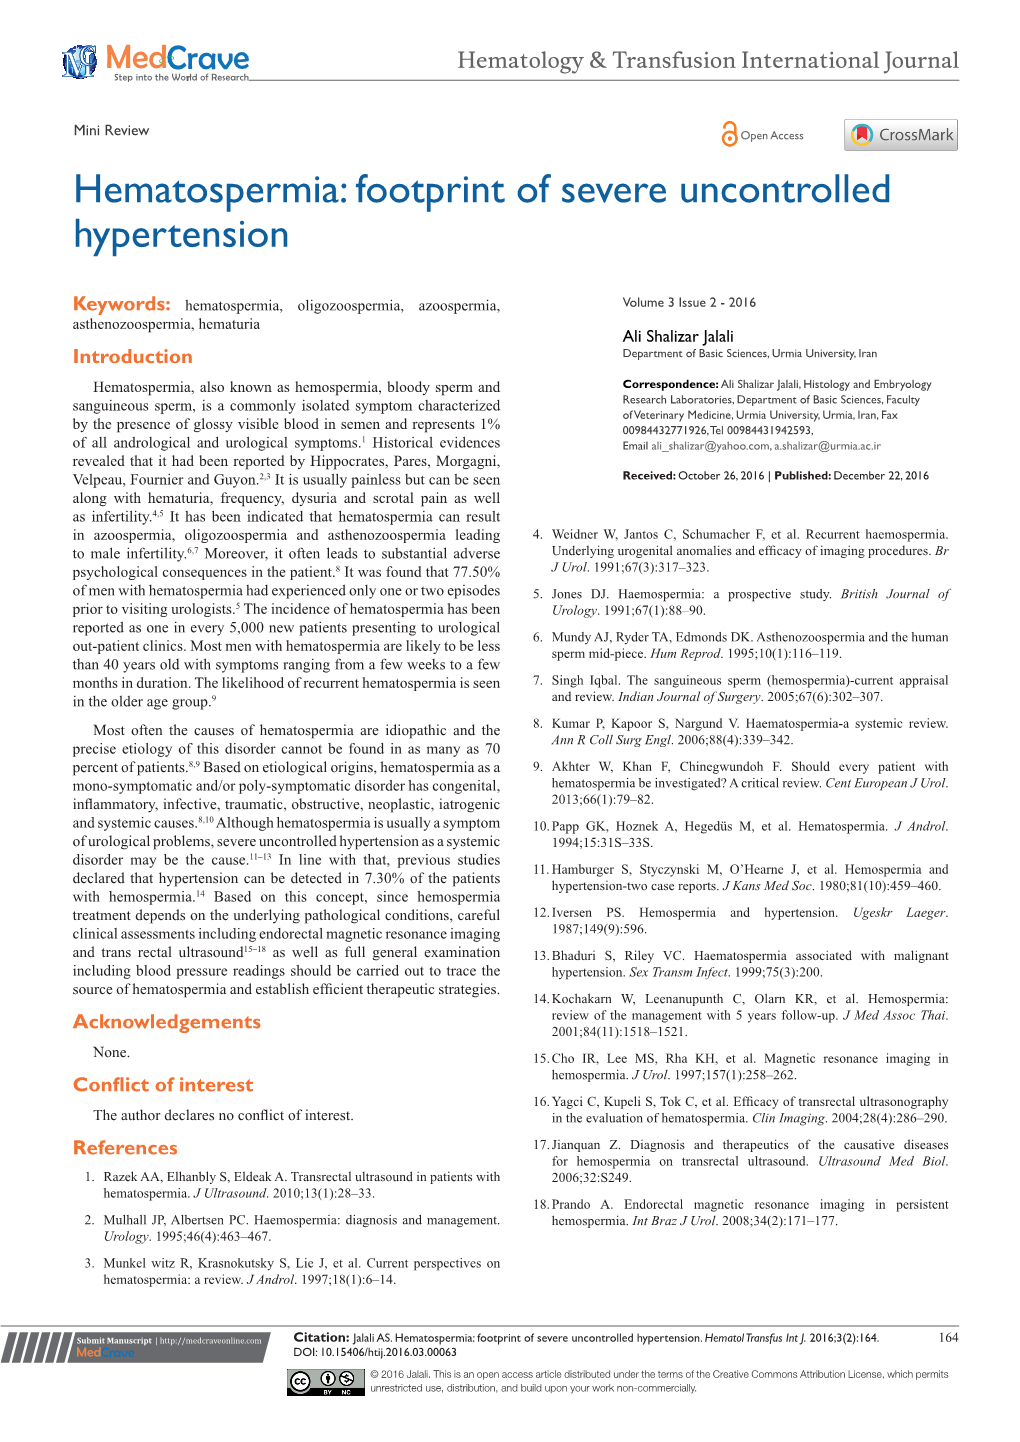 Hematospermia: Footprint of Severe Uncontrolled Hypertension